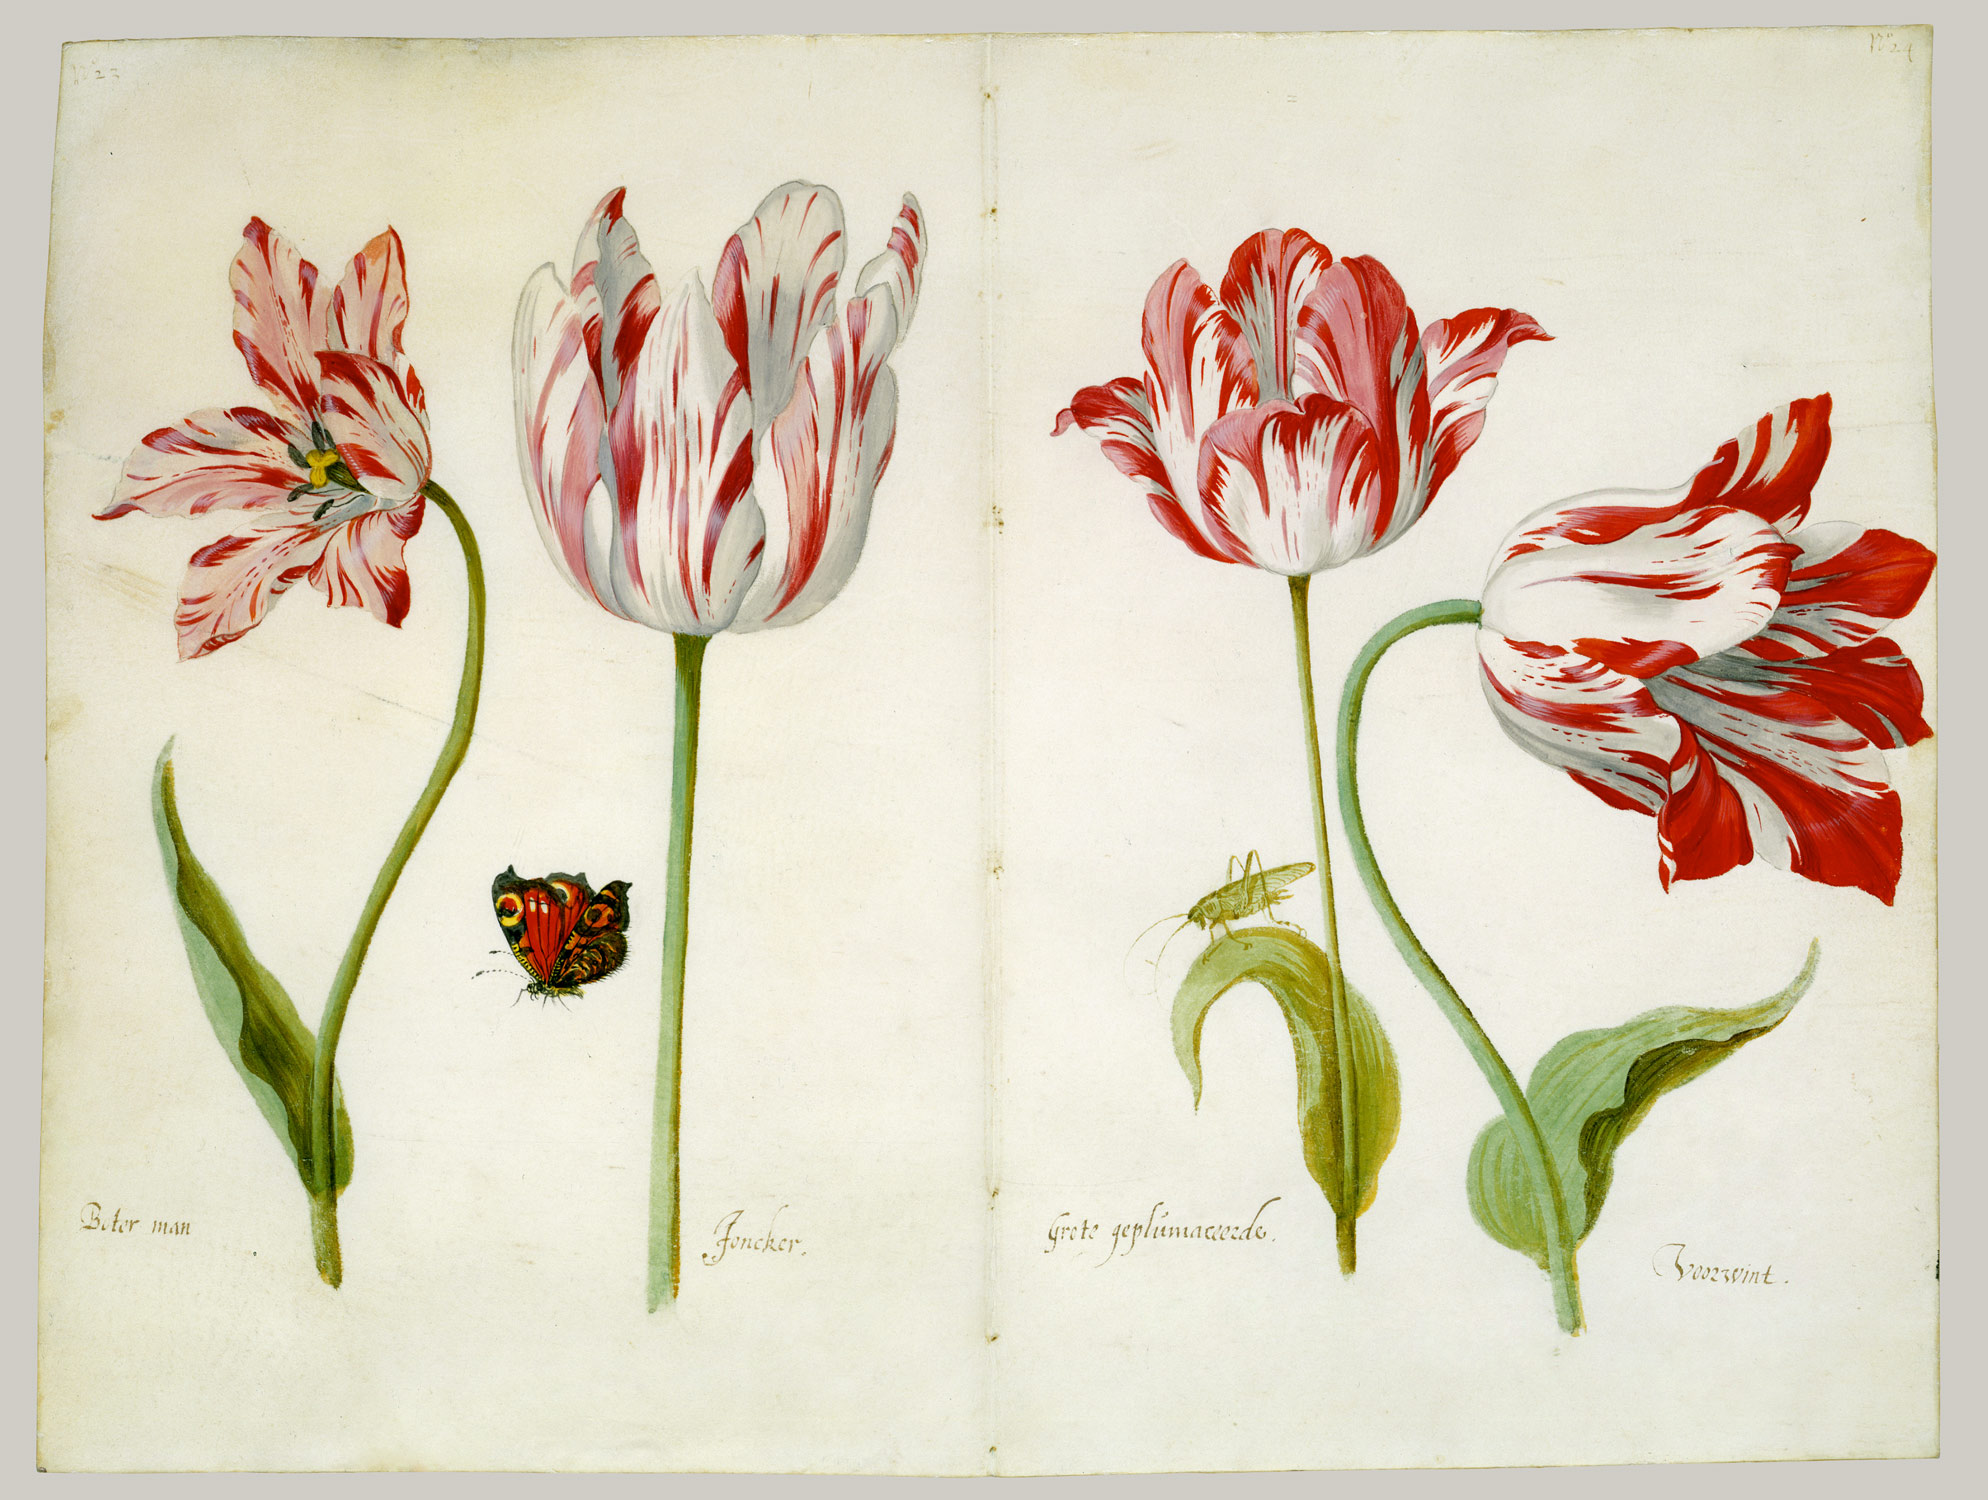 Jacob Marrel, Four Tulips: Boter man (Butter Man), Joncker (Nobleman), Grote geplumaceerde (The Great Plumed One), and Voorwint (With the Wind), ca. 1635–45. Met Museum.